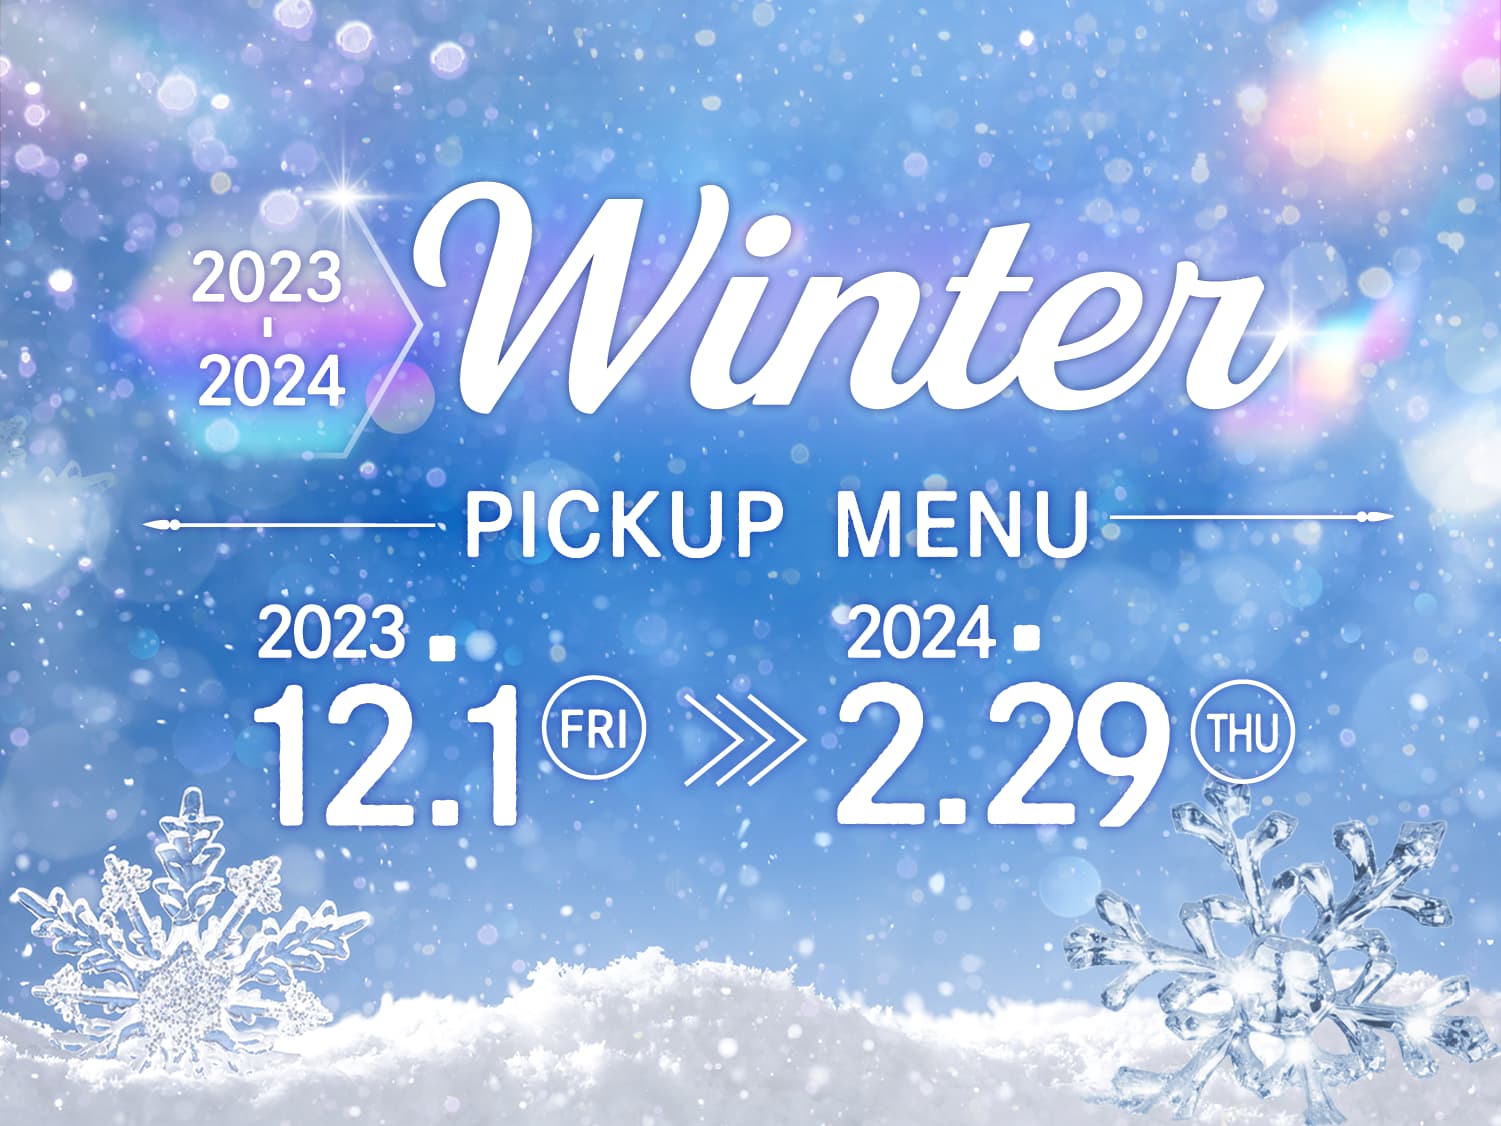 2023 Winter Pickup Menu